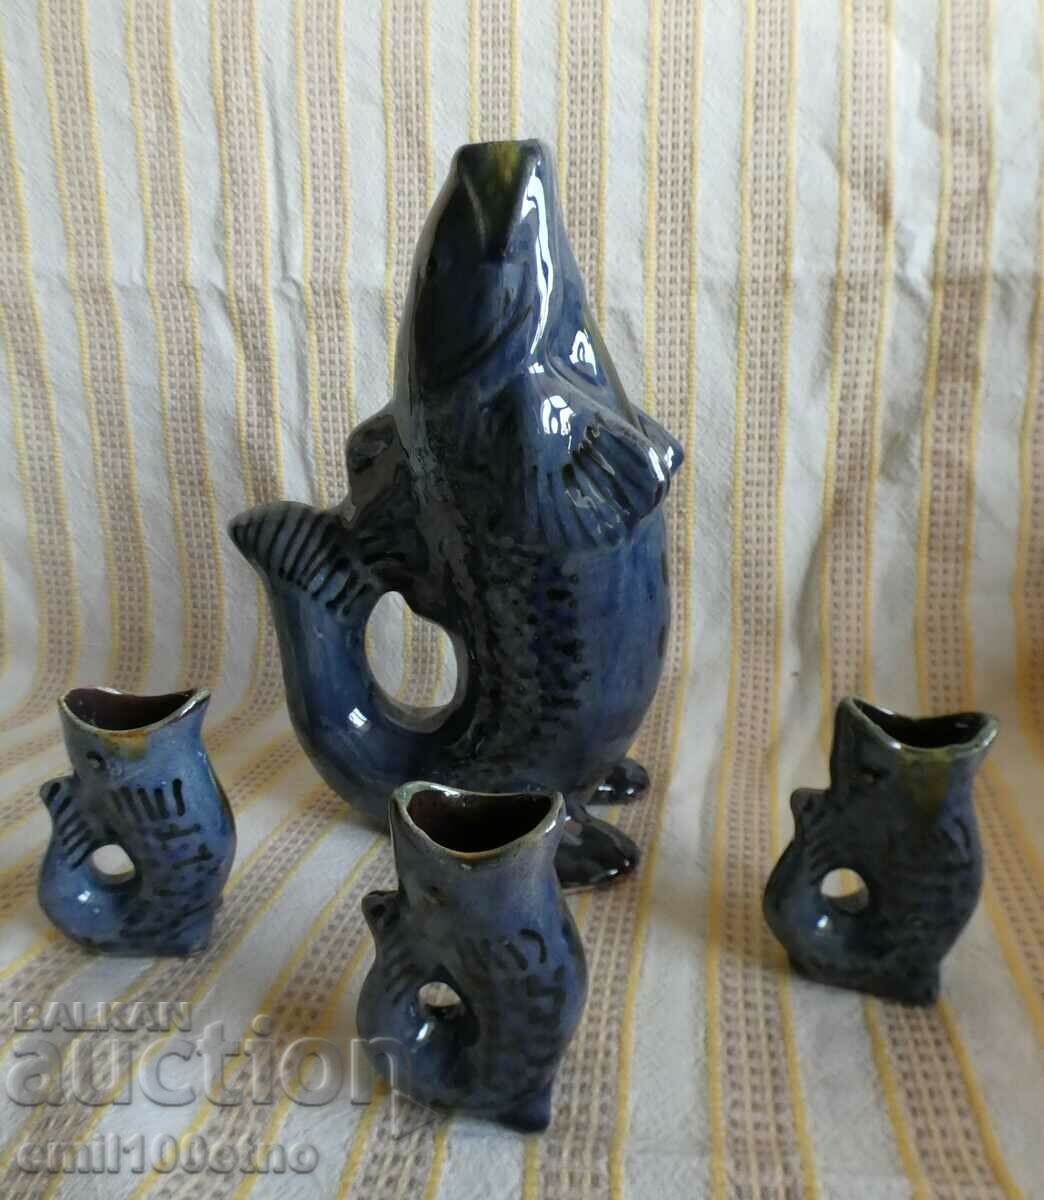 Jug in the shape of Fish plus 3 fish cups - ceramic